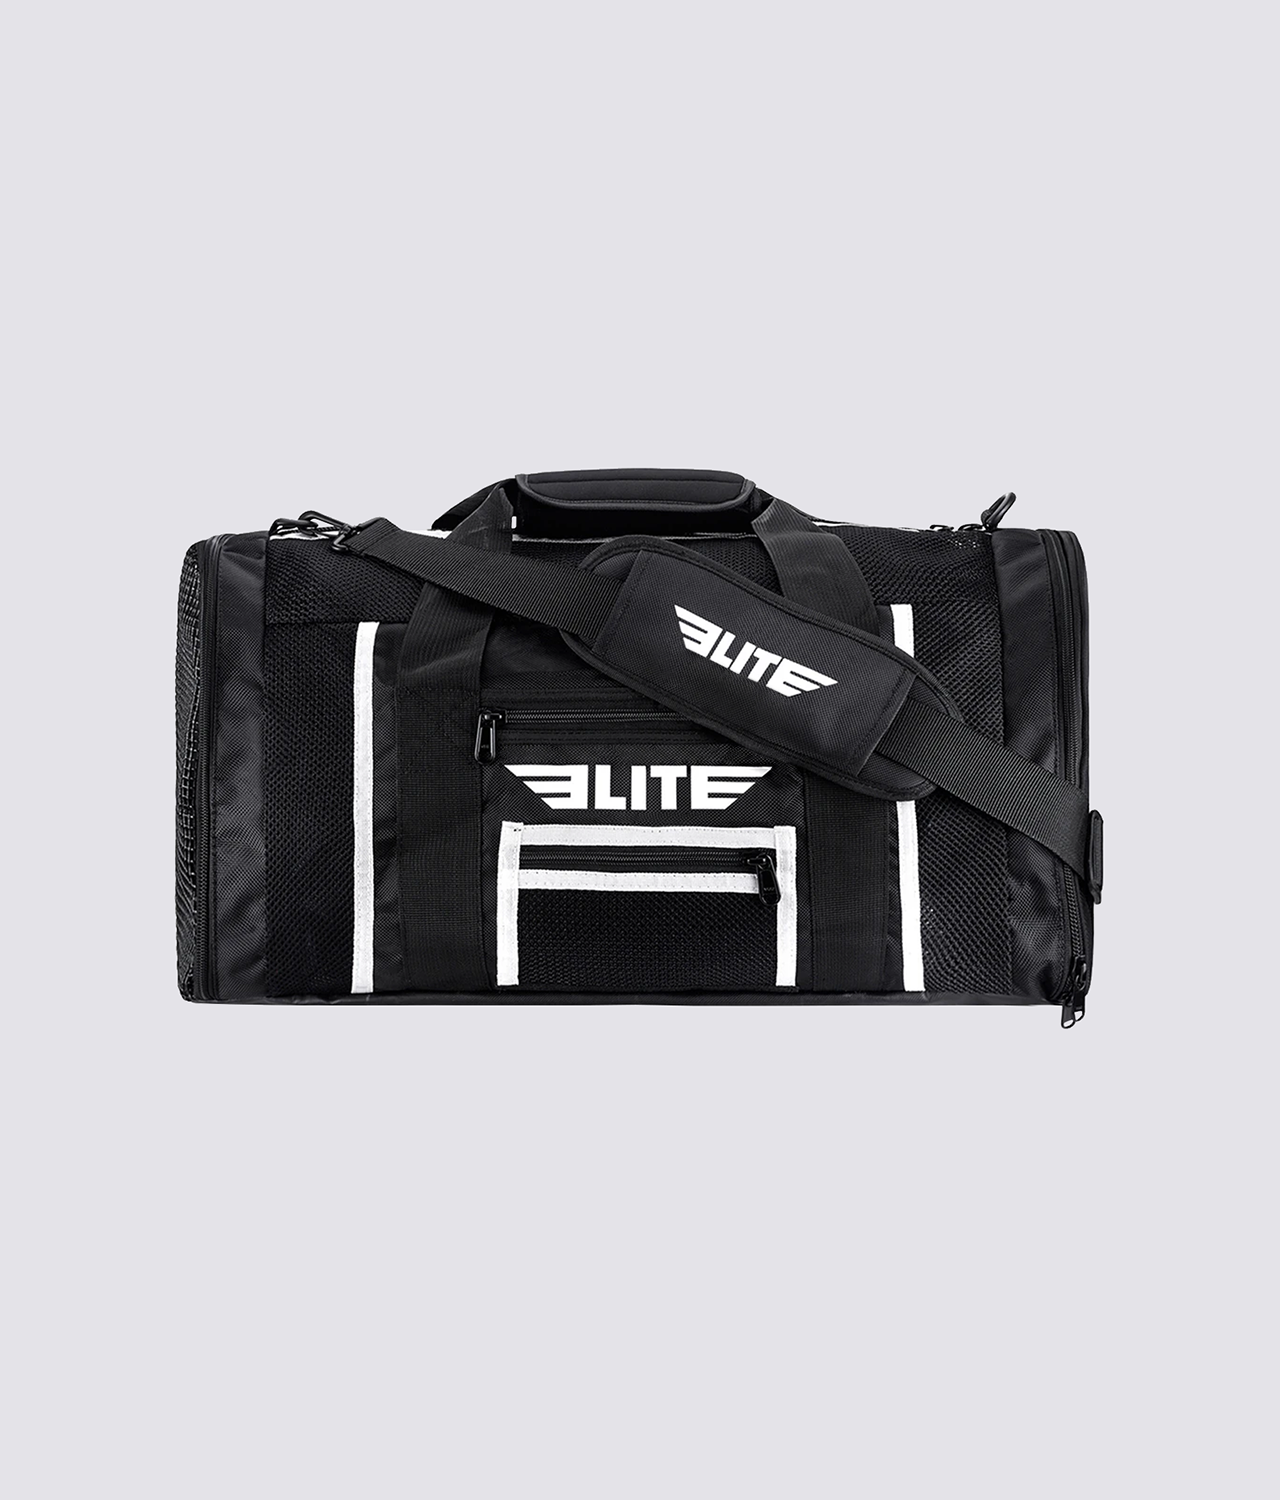 Mesh Black Large Crossfit Gear Gym Bag